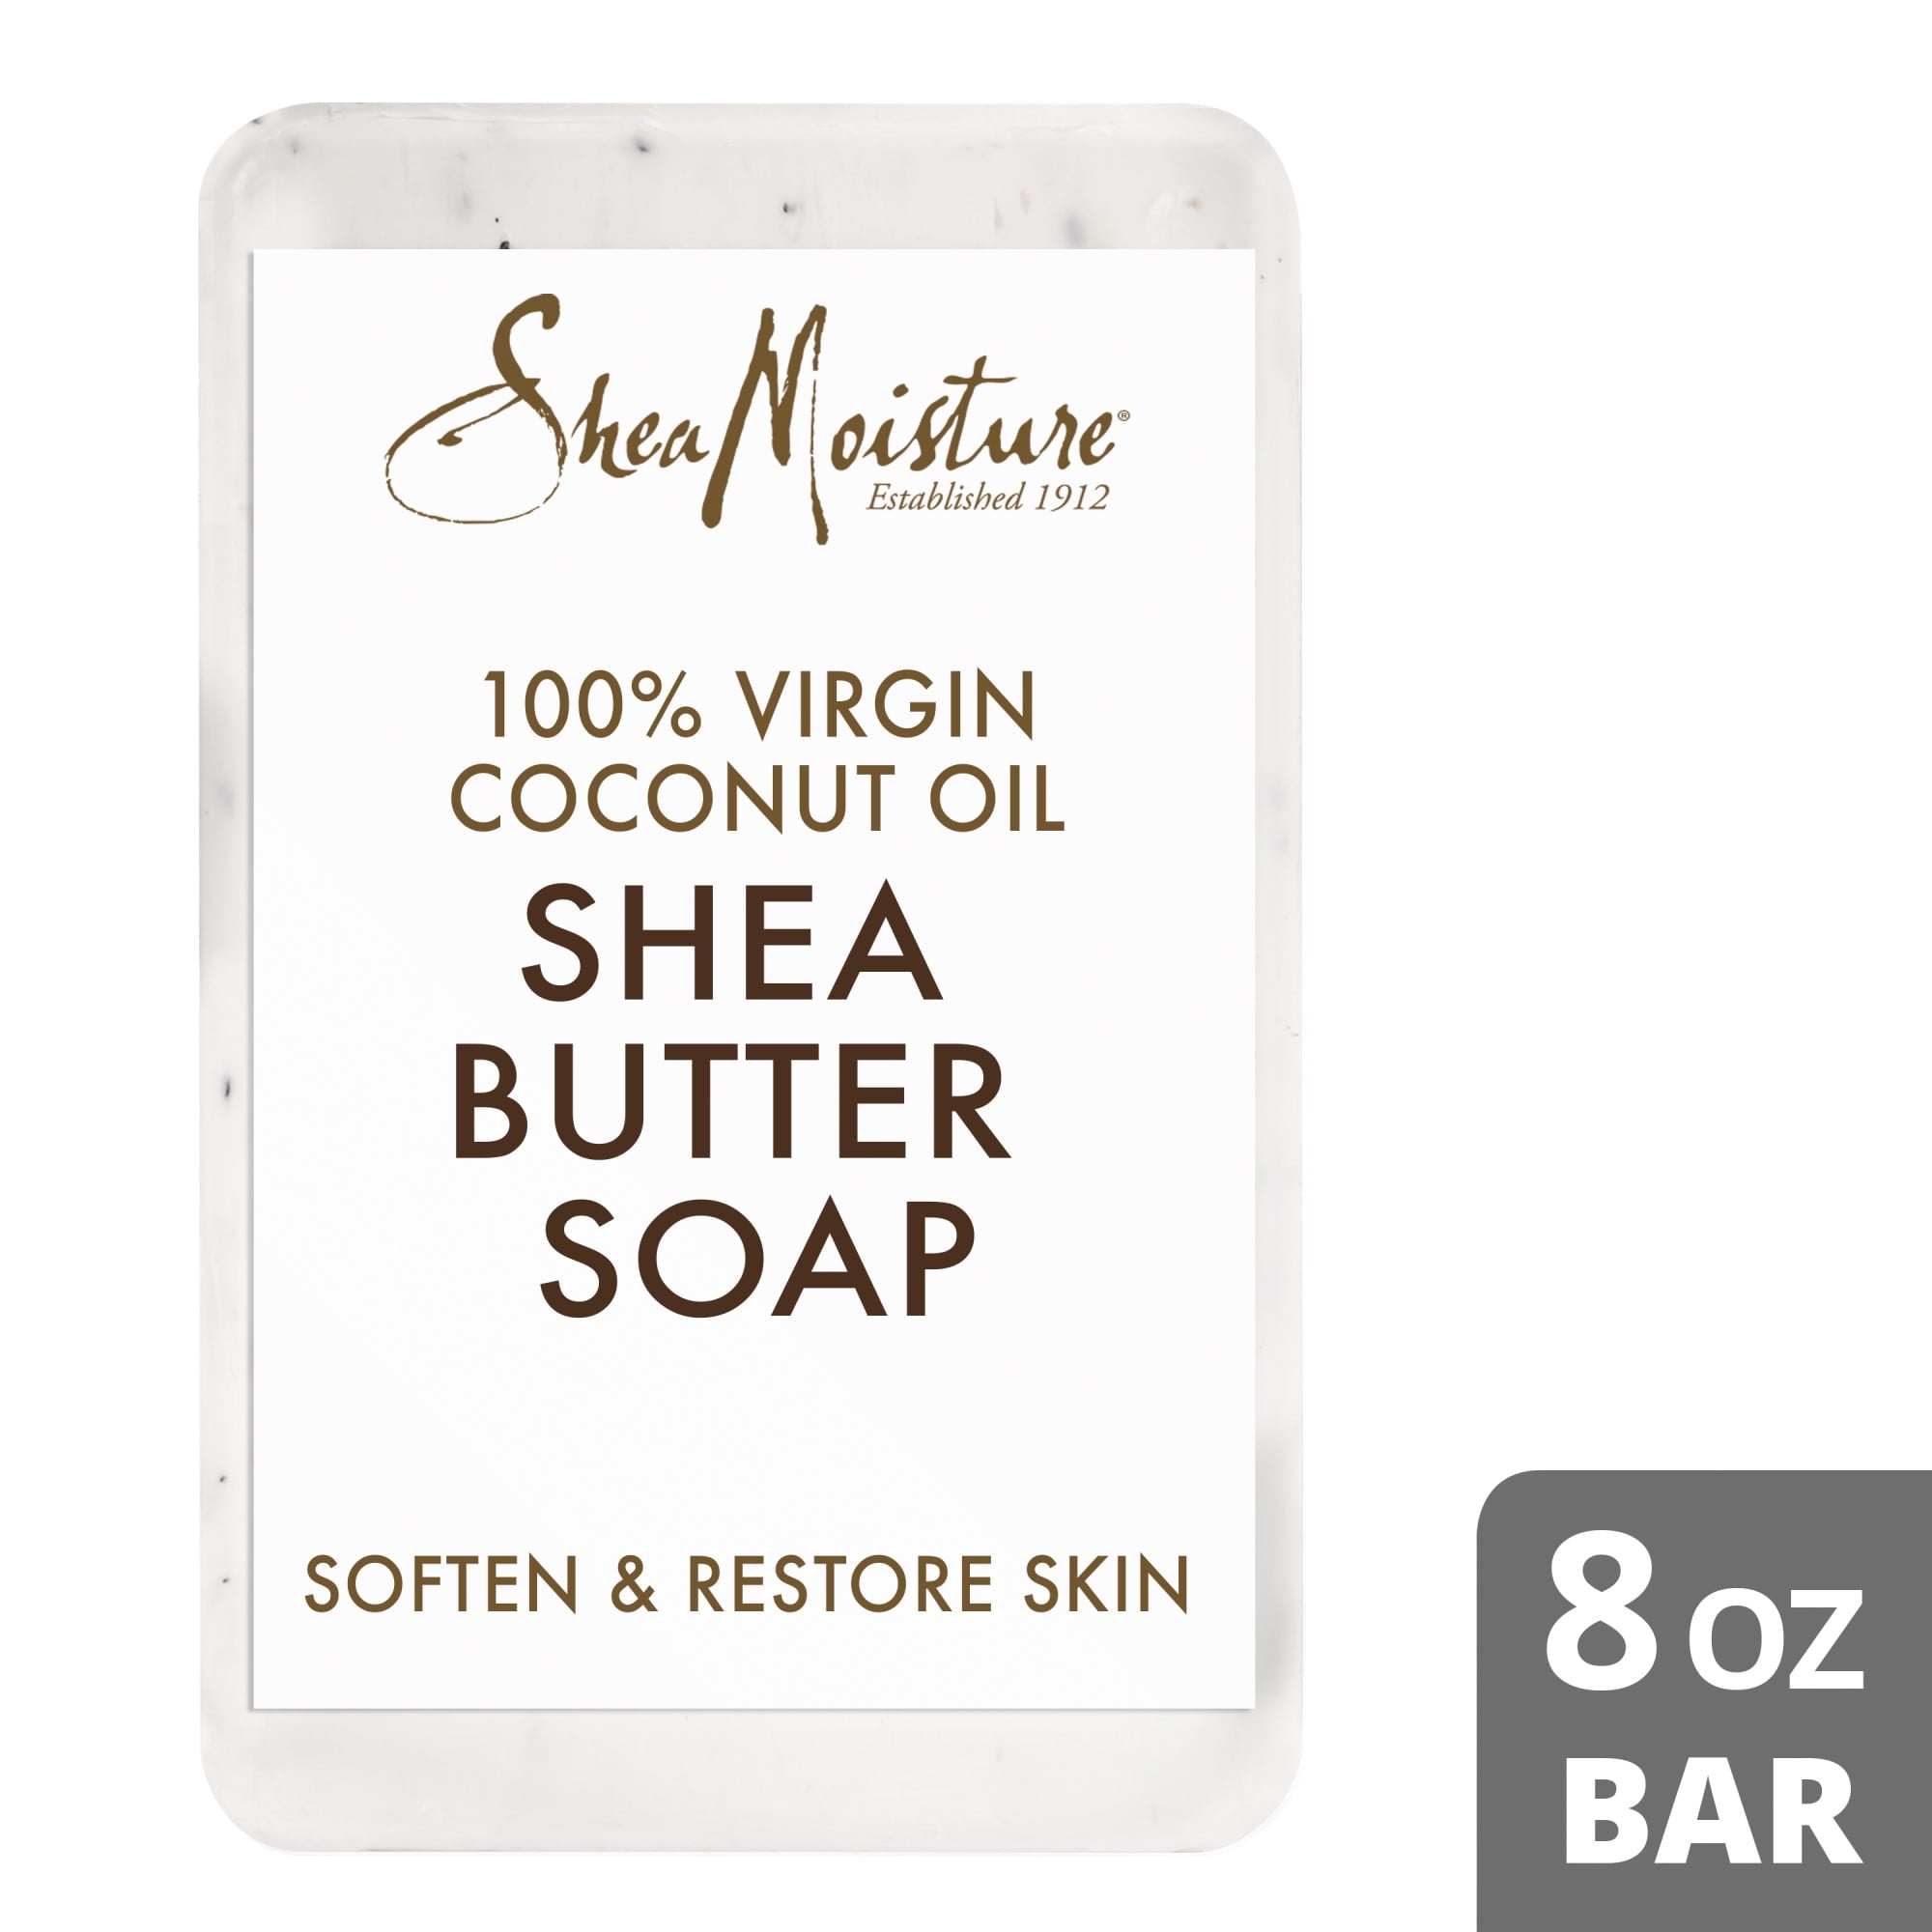 Shea Moisture 100% Virgin Coconut Oil Shea Butter Soap 8 Oz Bar